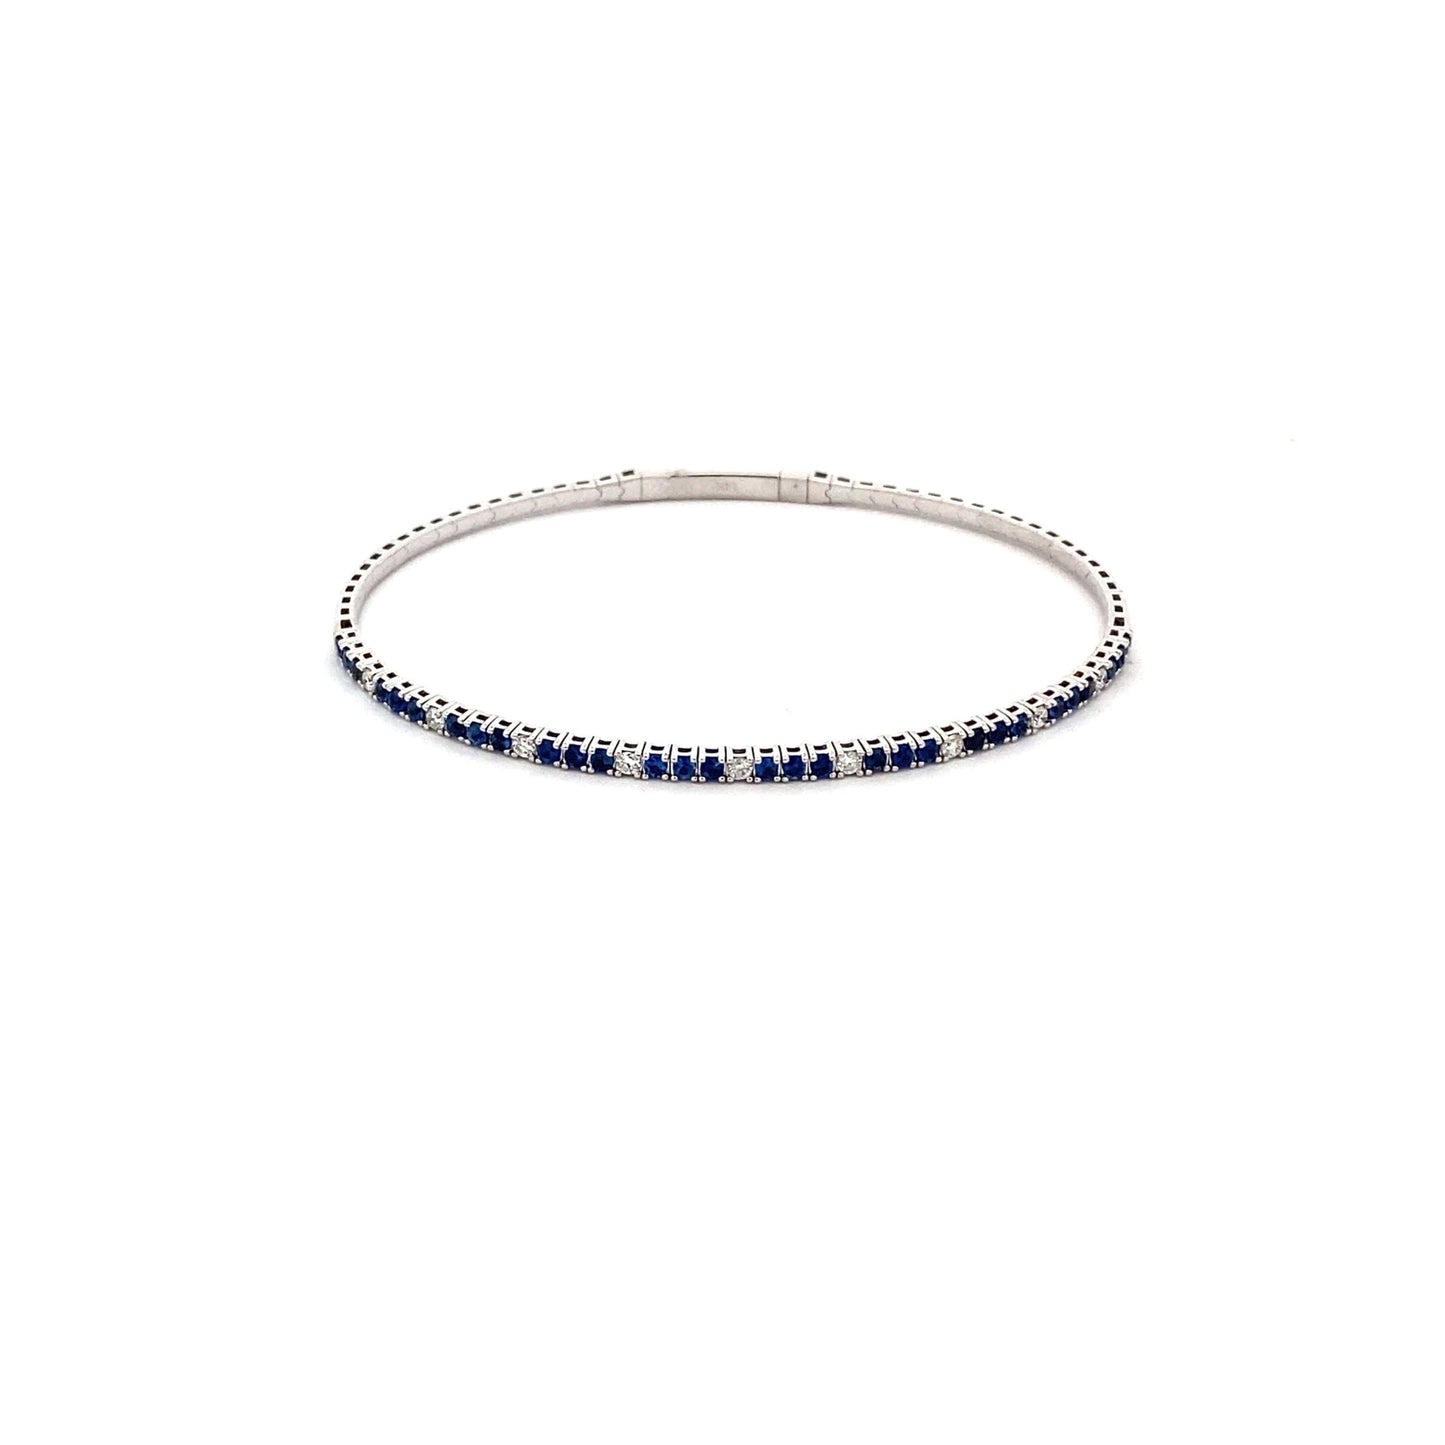 Bracelet sapphire & diamond flex bangle 14kt white gold - Gaines Jewelers